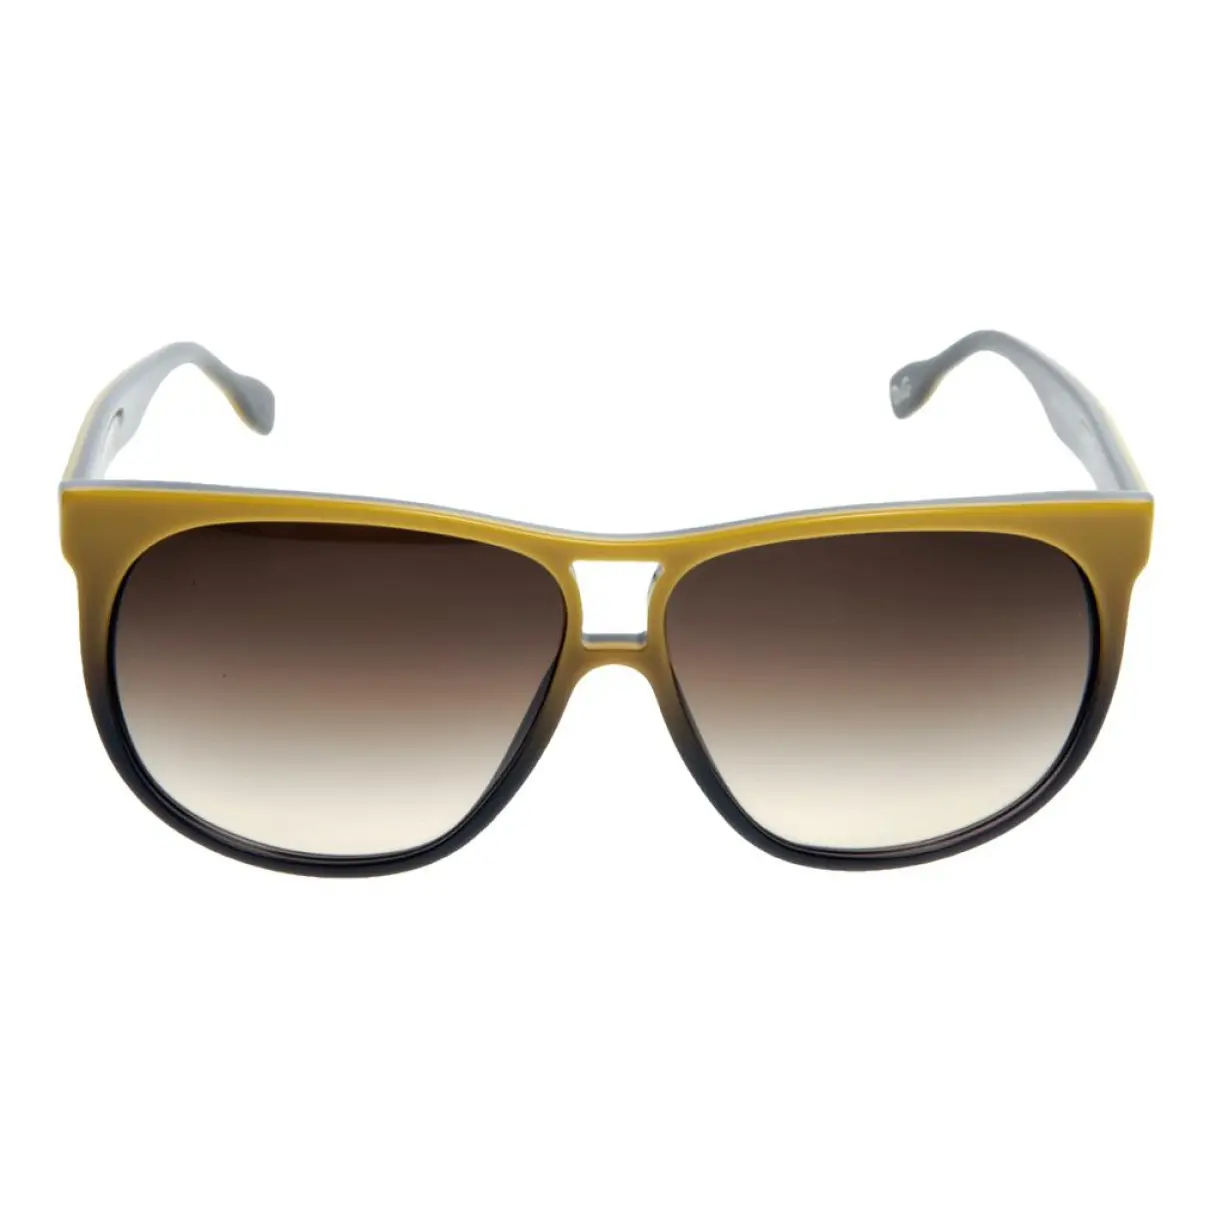 Aviator sunglasses D&G